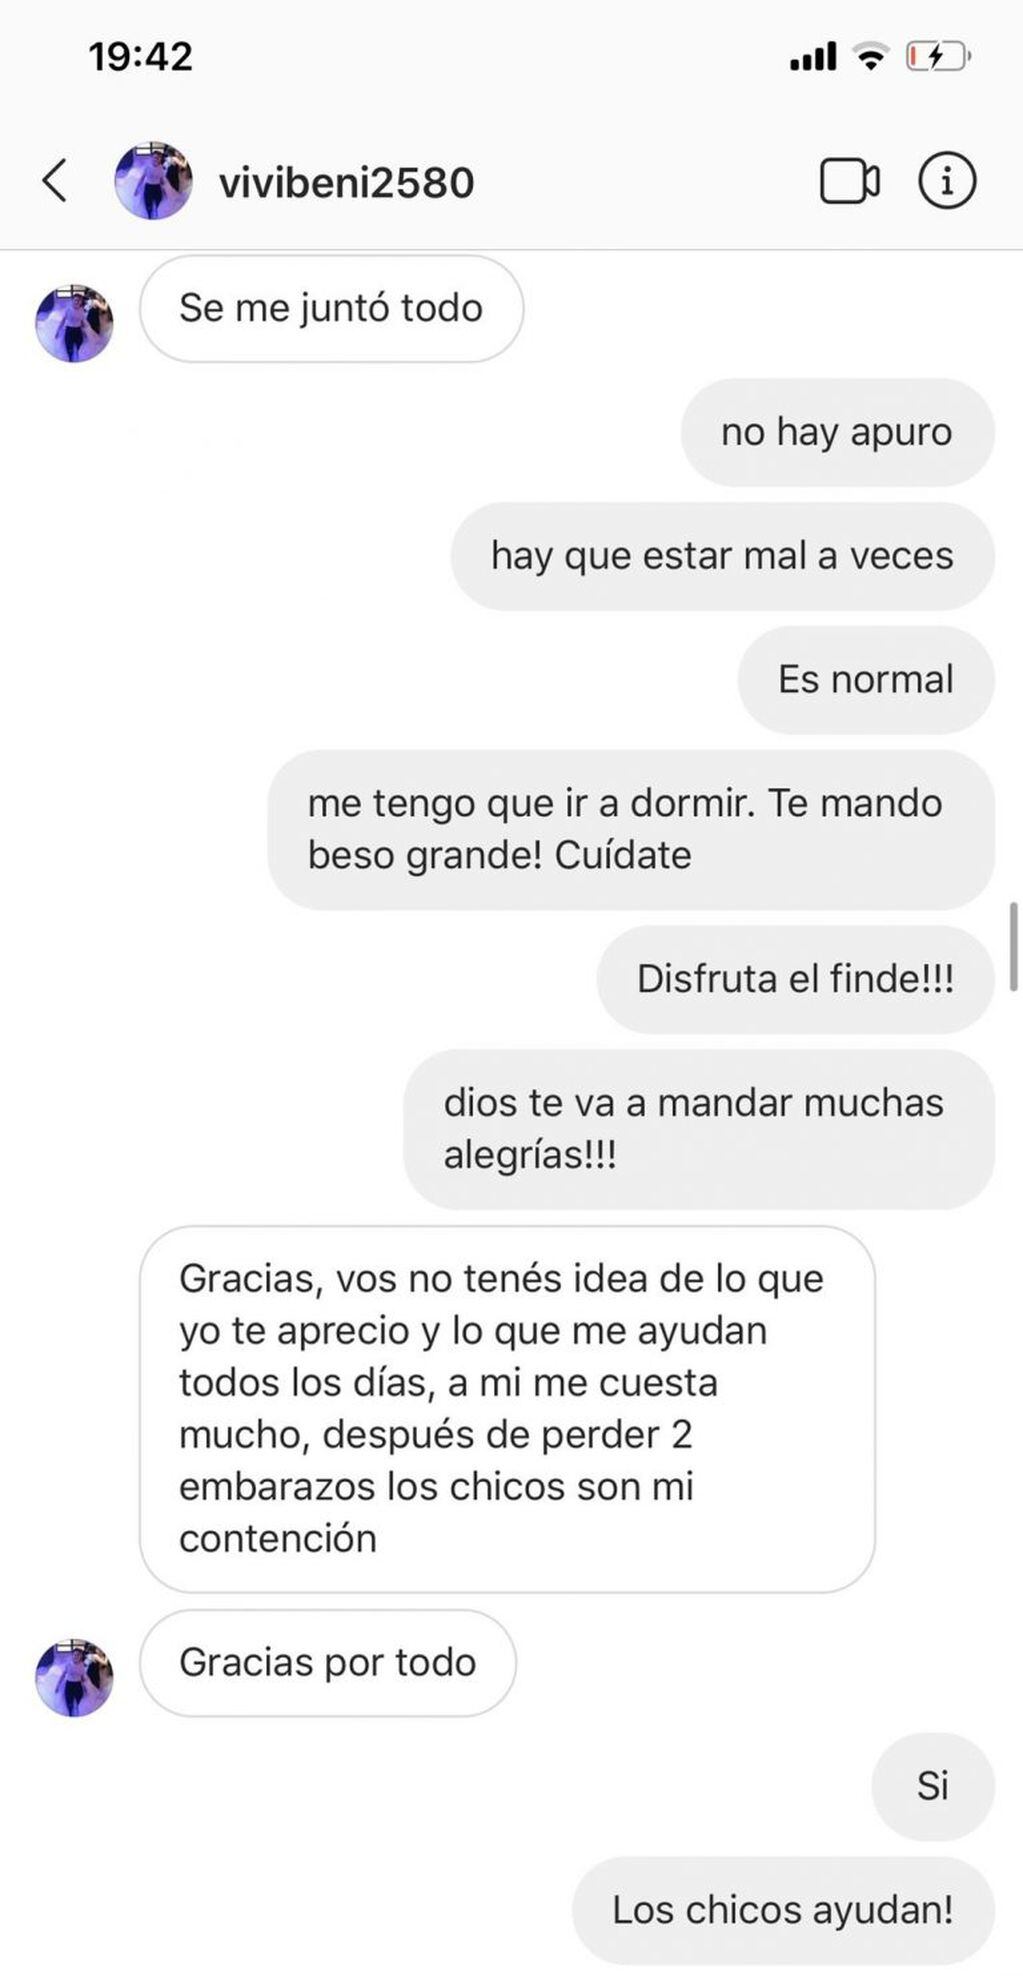 Los chats que publicó Pampita entre ella y Viviana Benítez (Twitter)